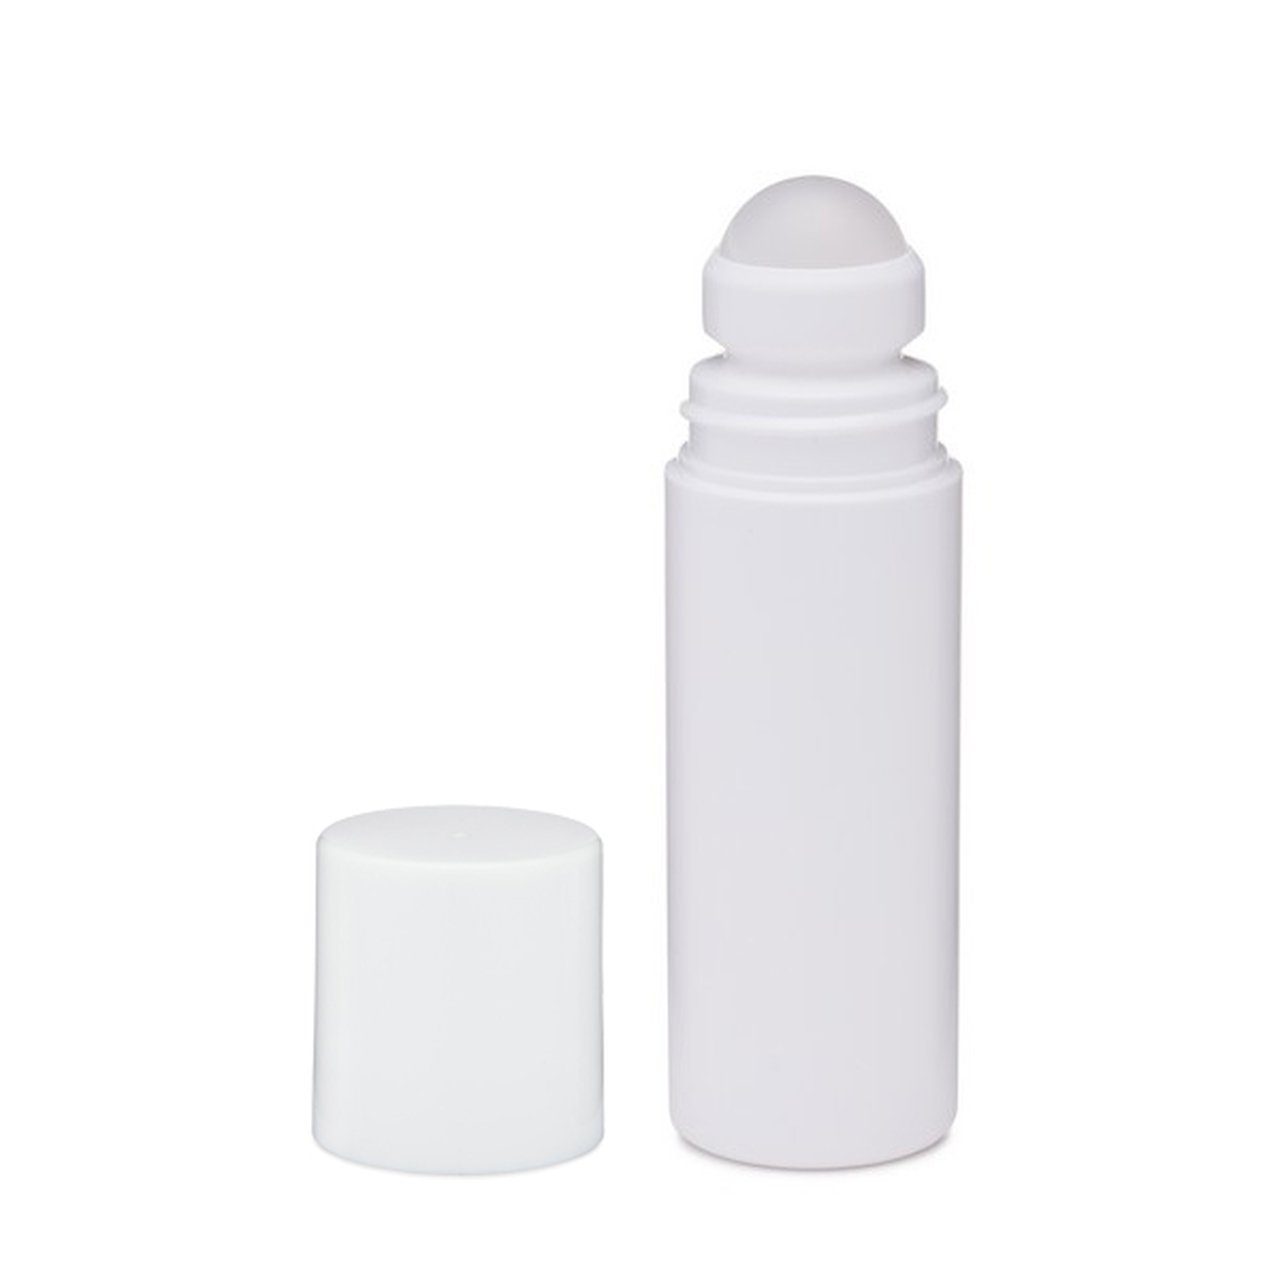 Smooth Cap for White HDPE Roll On Bottles. 1-3oz.  - CASED 900 - Rock Bottom Bottles / Packaging Company LLC